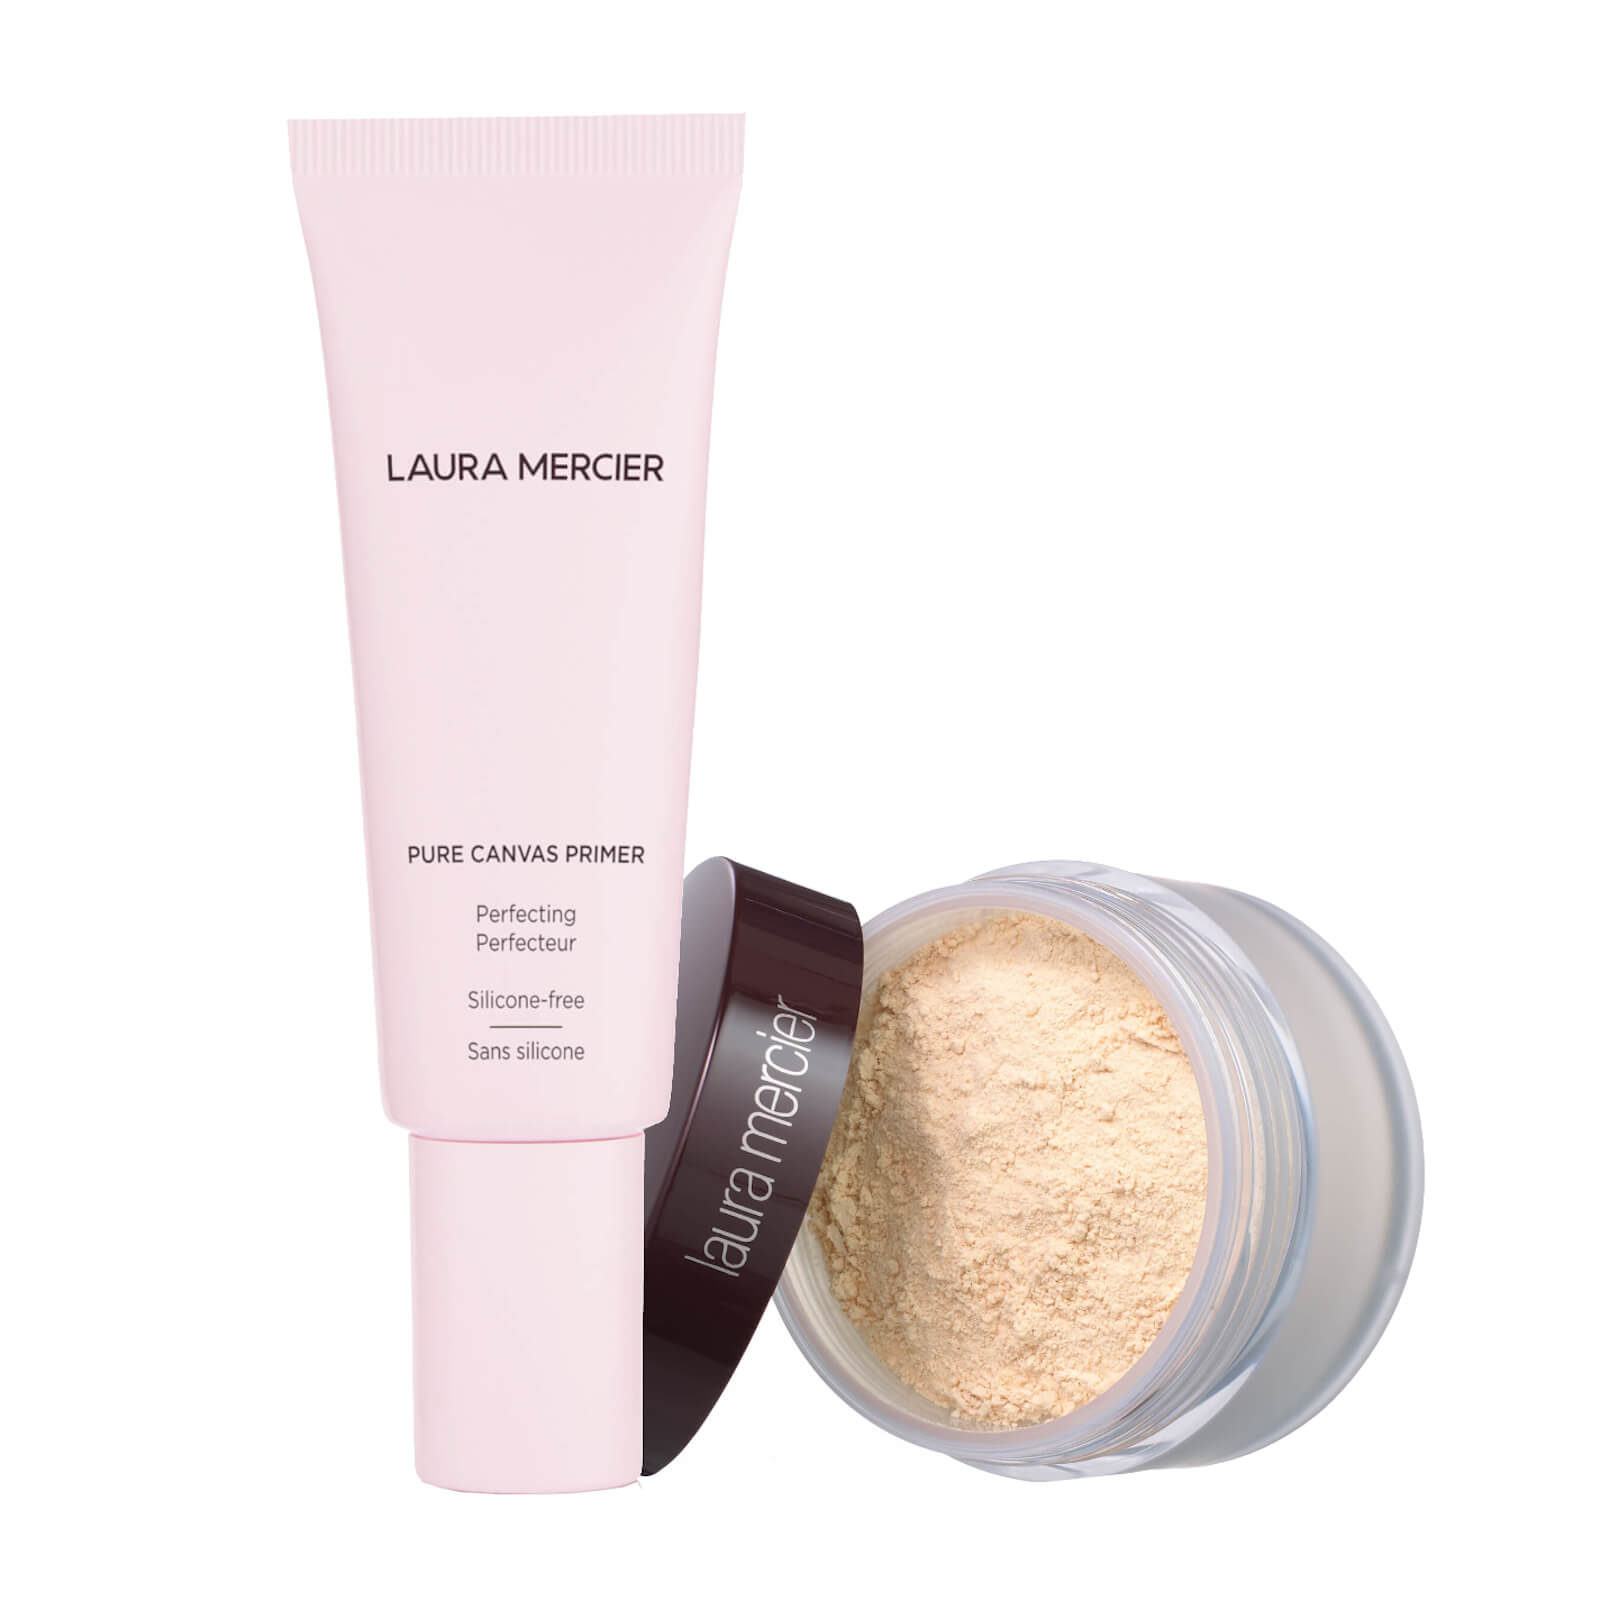 Laura Mercier Pure Canvas Primer Perfecting & Translucent Loose Setting Powder (Various Shades) - Translucent